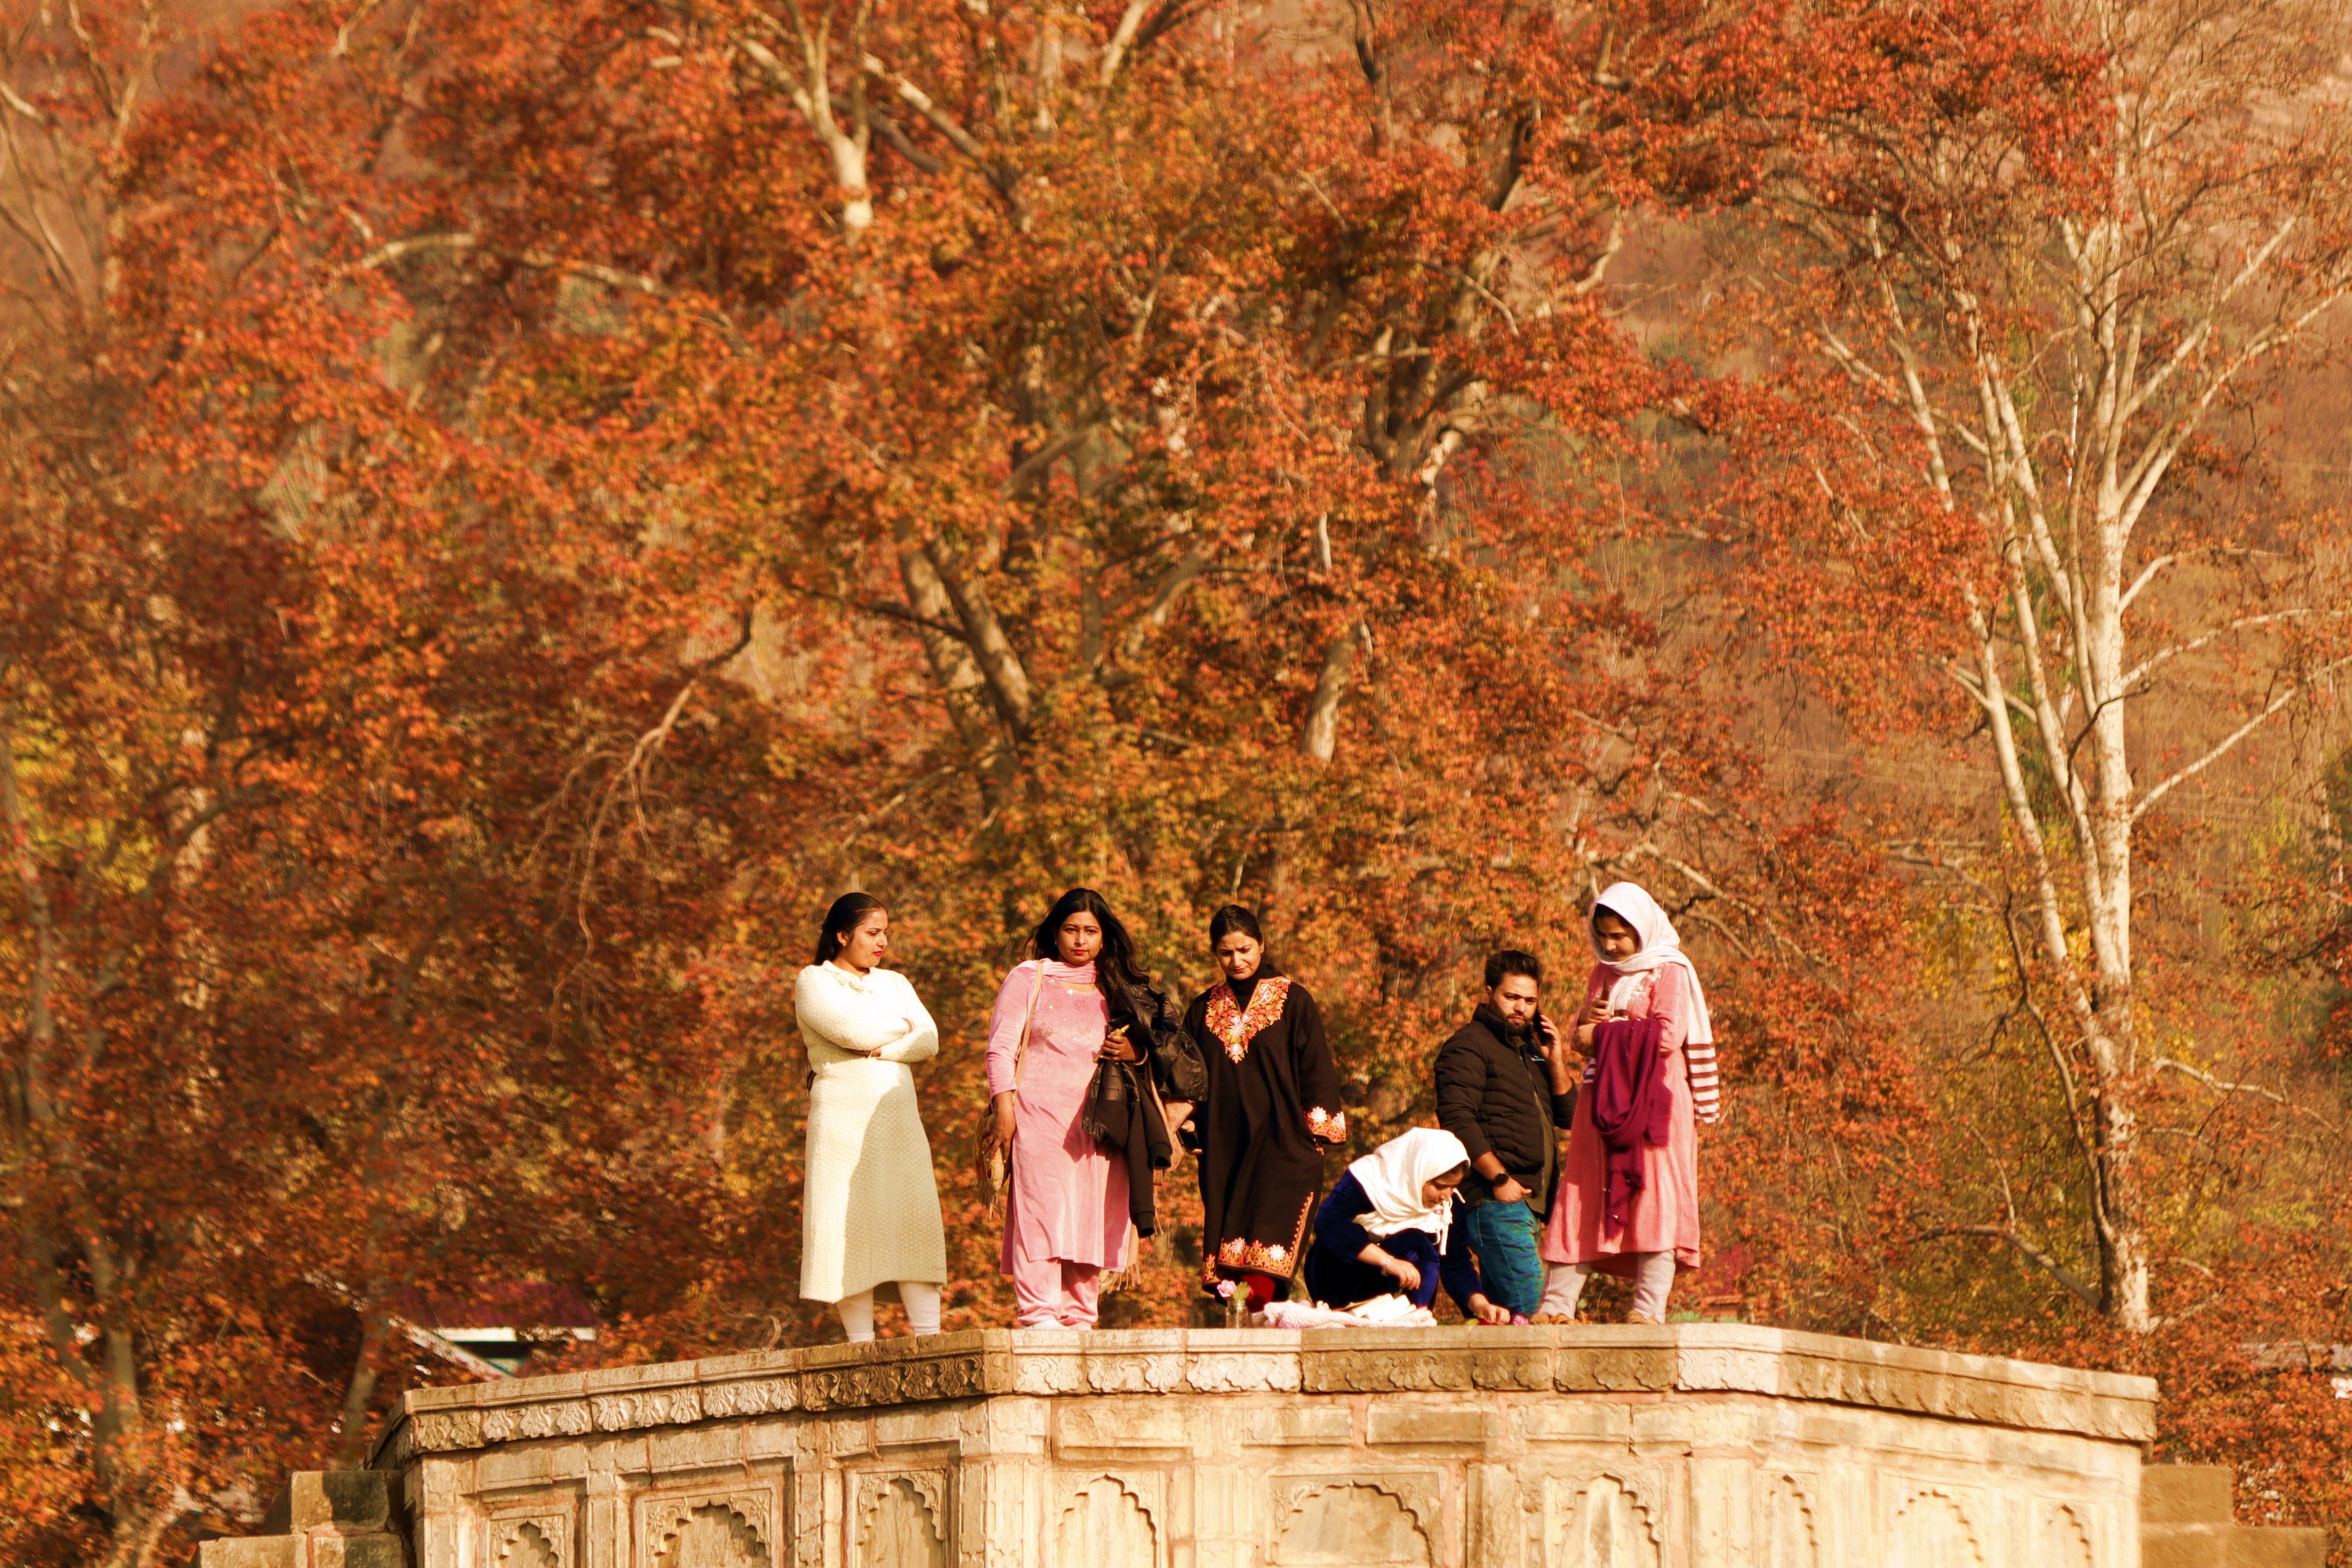 Young Kashmir women enjoying the scenic splendor of Kashmir's autumn